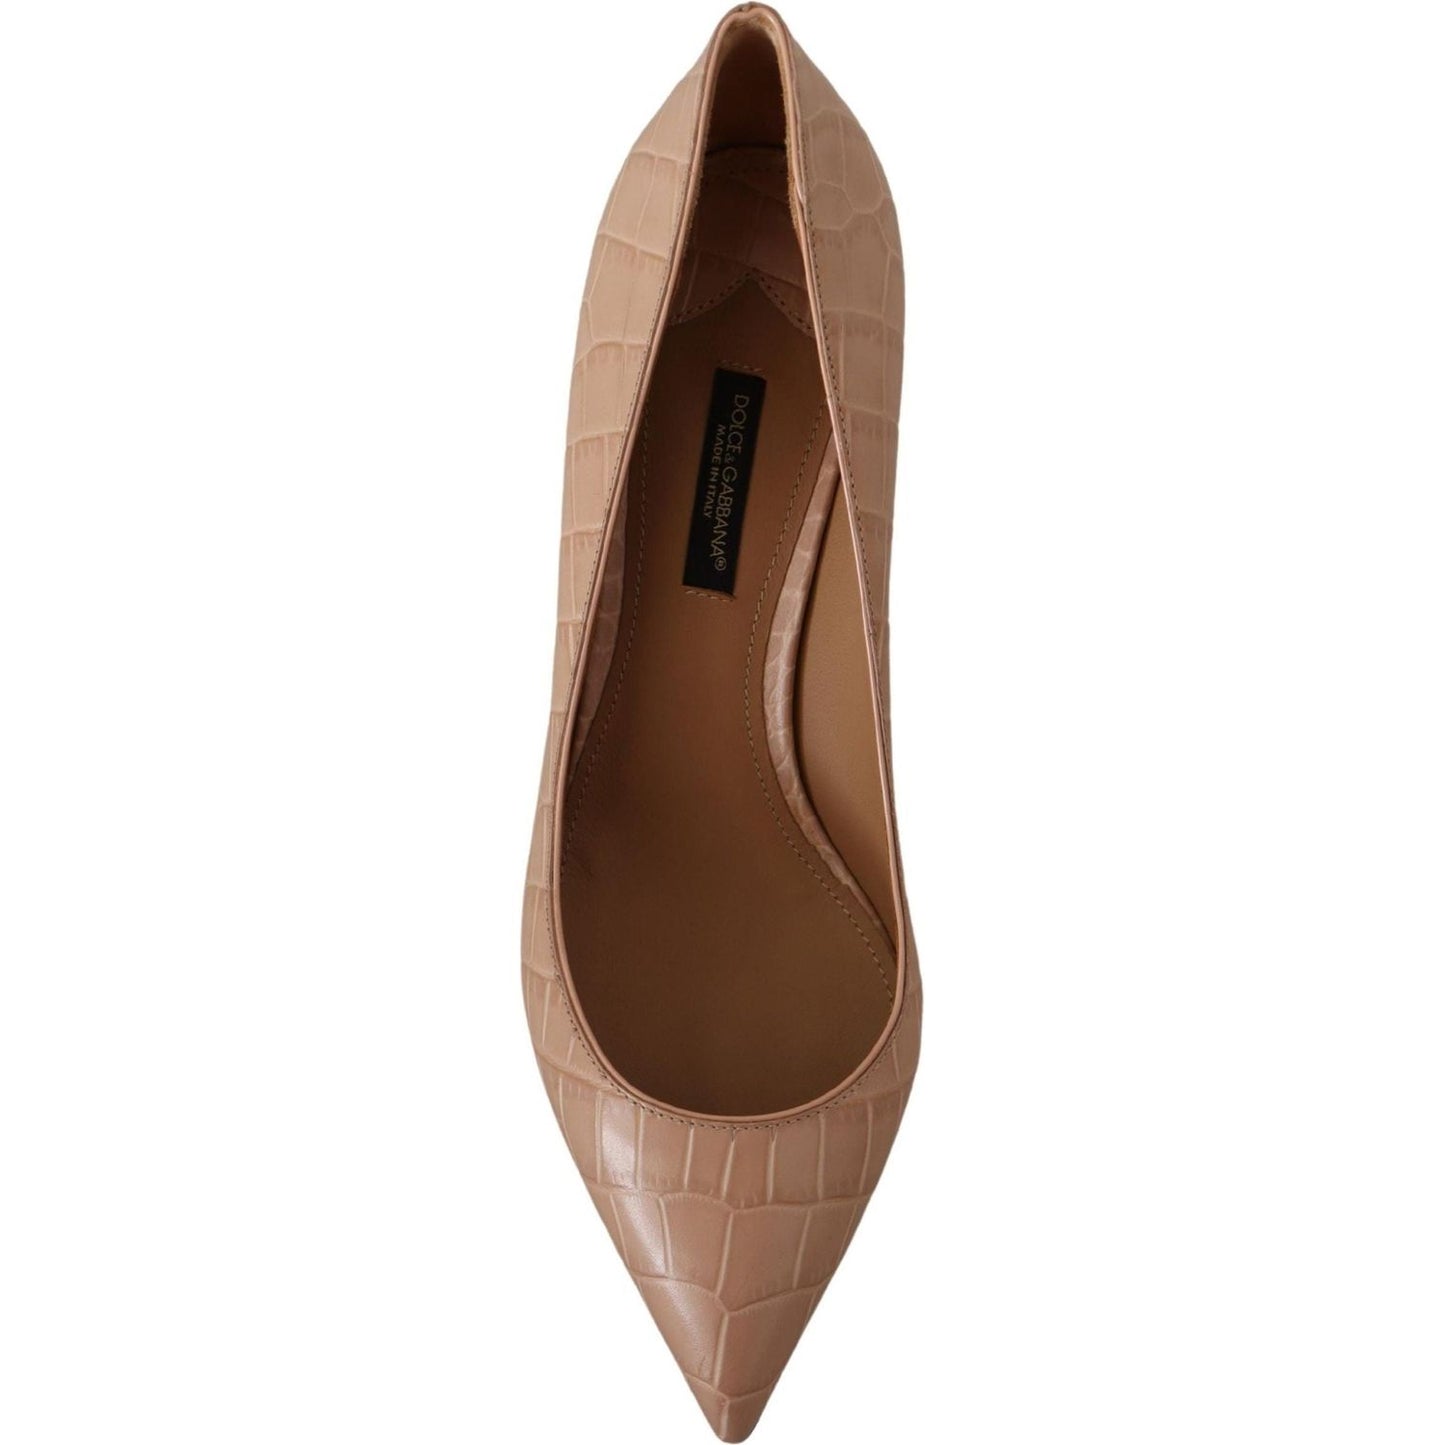 Dolce & Gabbana Elegant Beige Leather Pumps beige-leather-pointed-heels-pumps-shoes